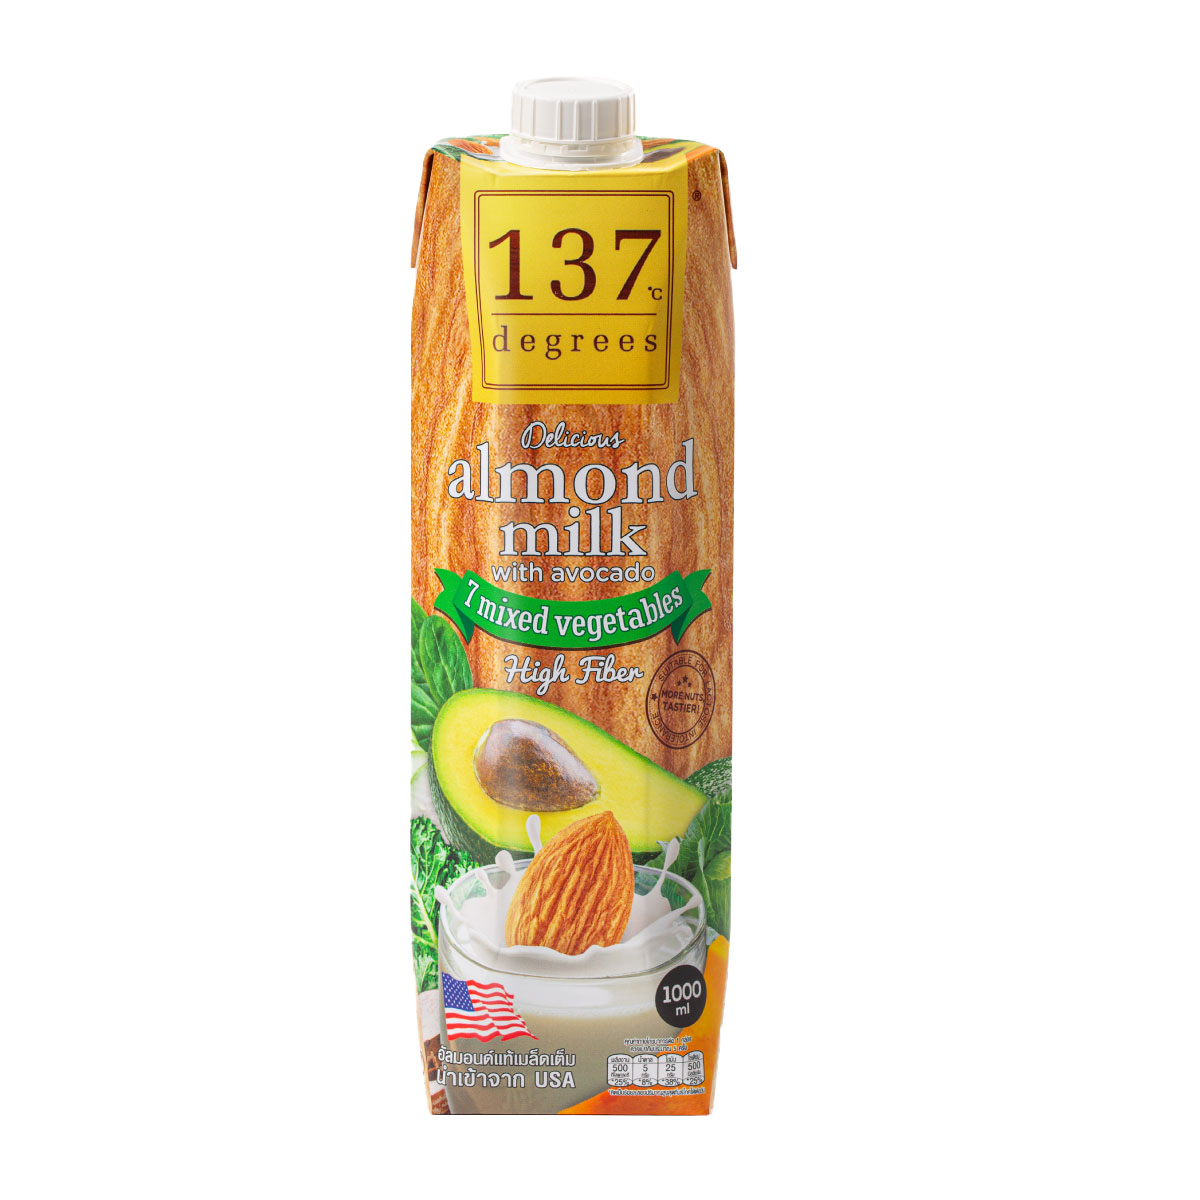 137 degrees Almond Milk 7 vegetables avocado milk